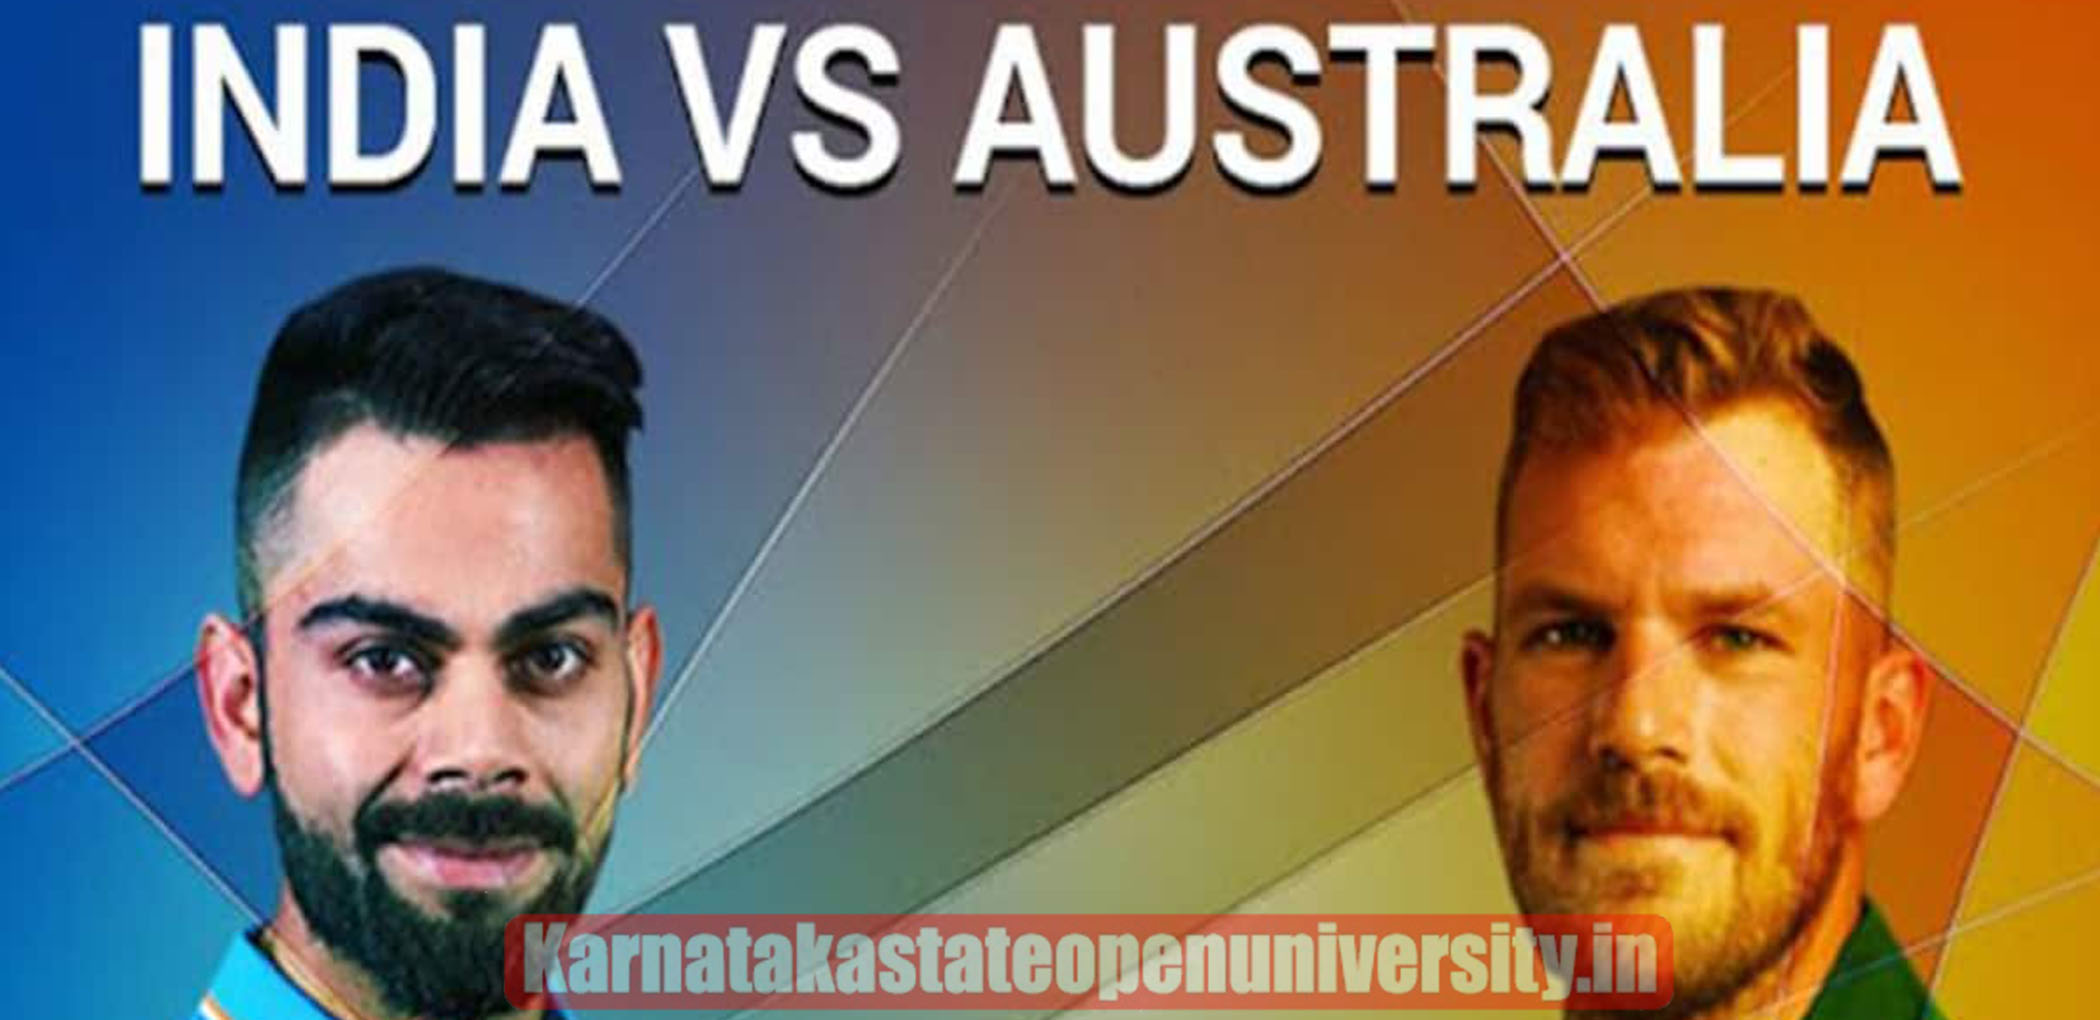 The India vs Austrial t 20